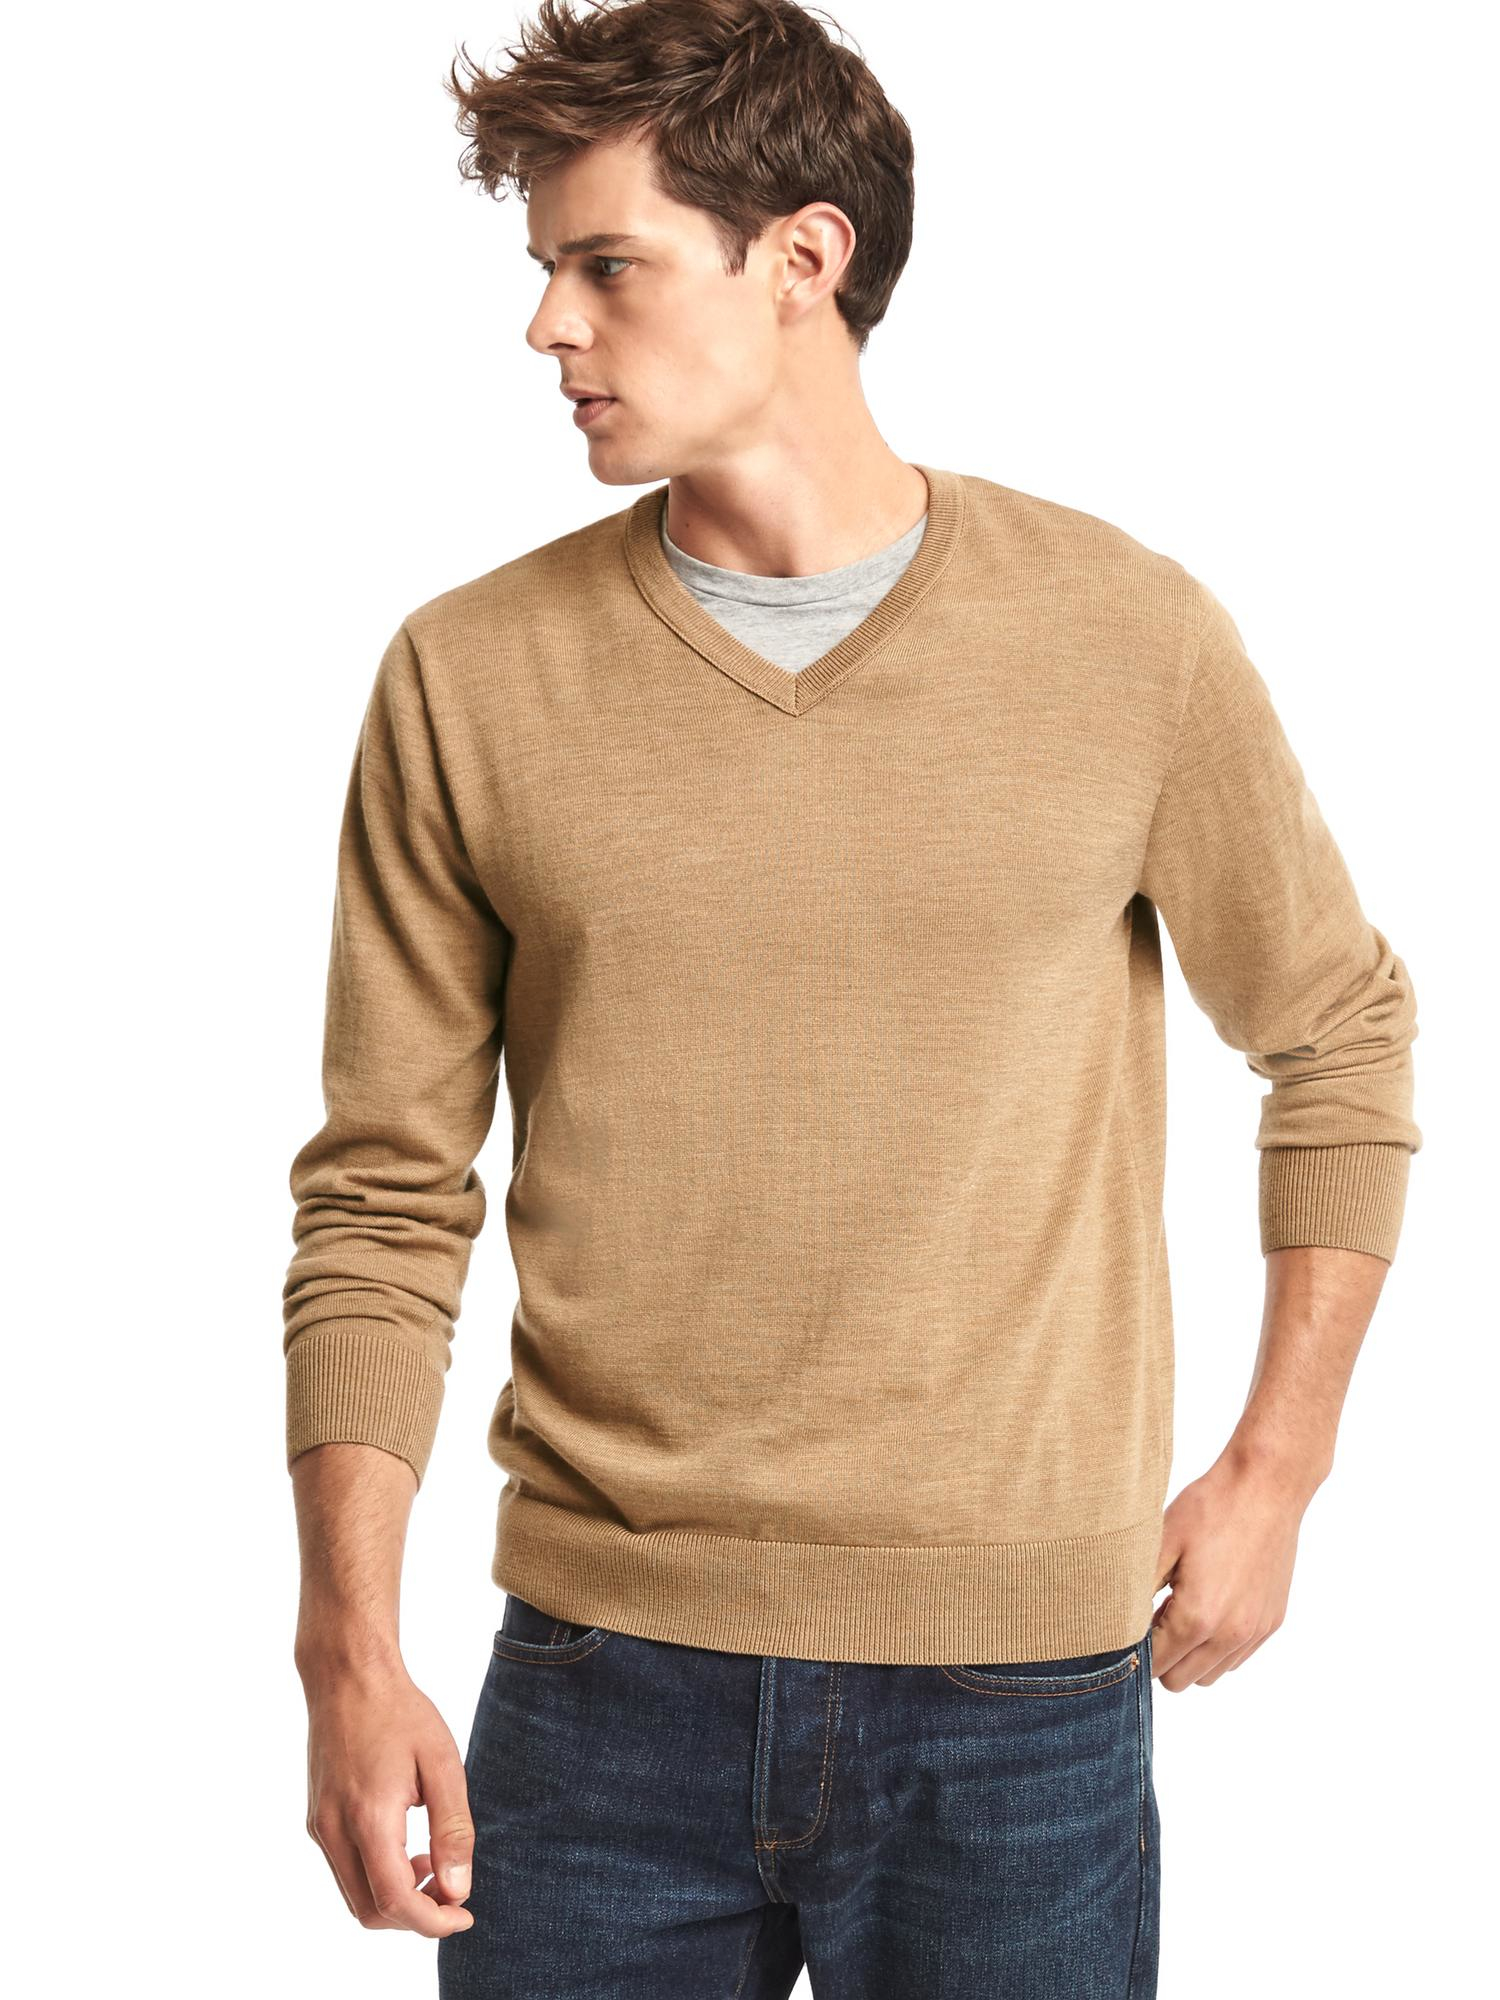 Gap Merino Wool V-neck Sweater in Oatmeal/Camel (Natural) for Men - Lyst